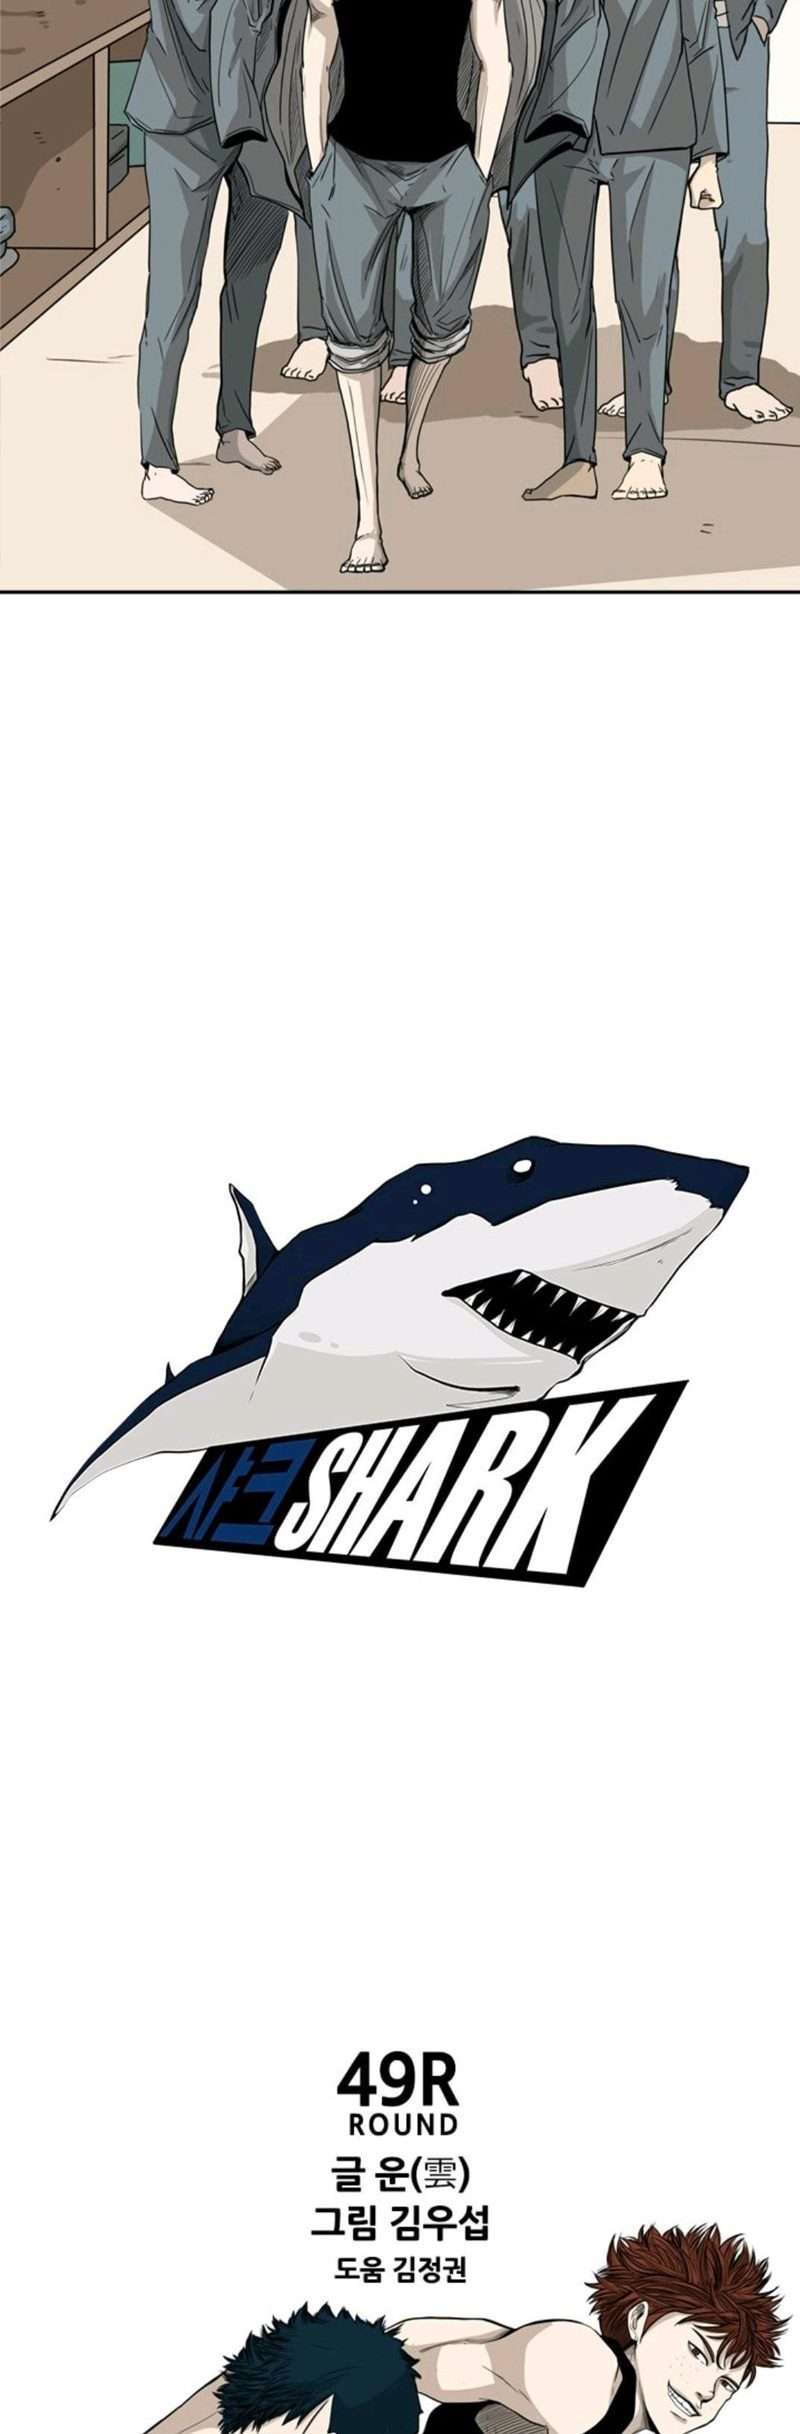 Shark Chapter 49